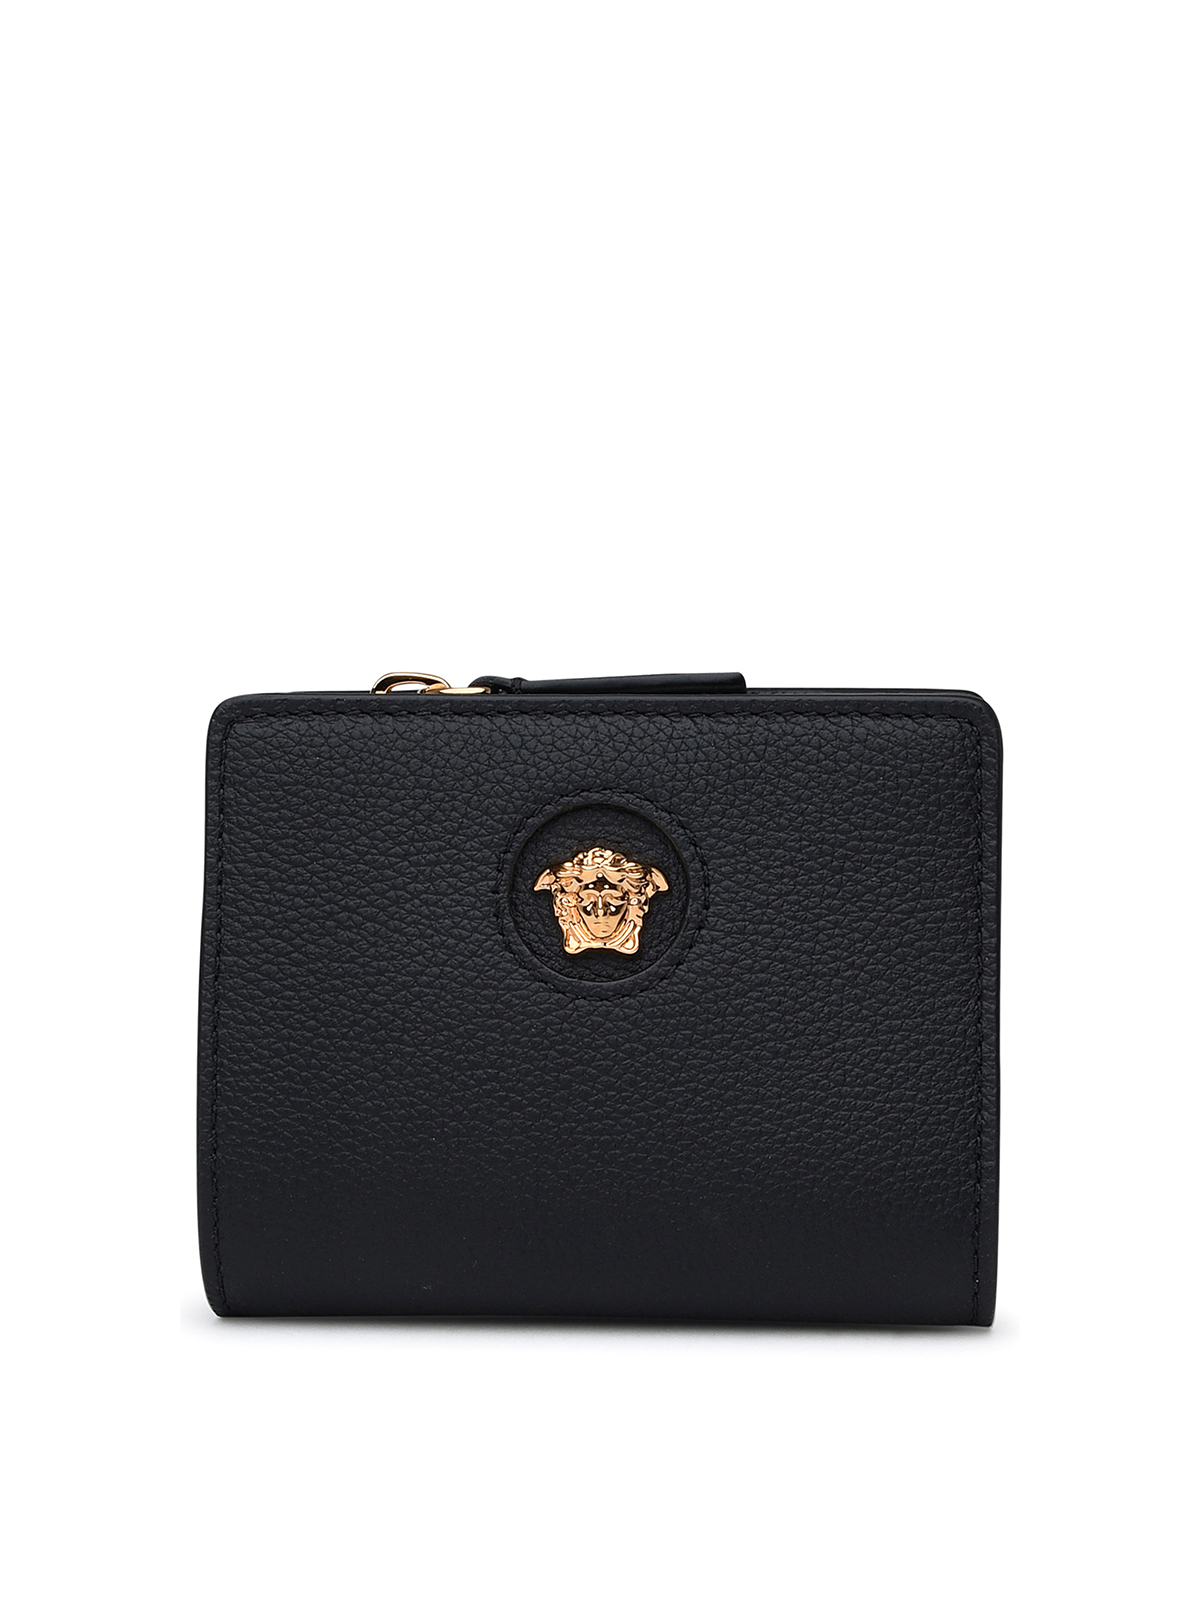 Versace La Medusa Leather Wallet In Black